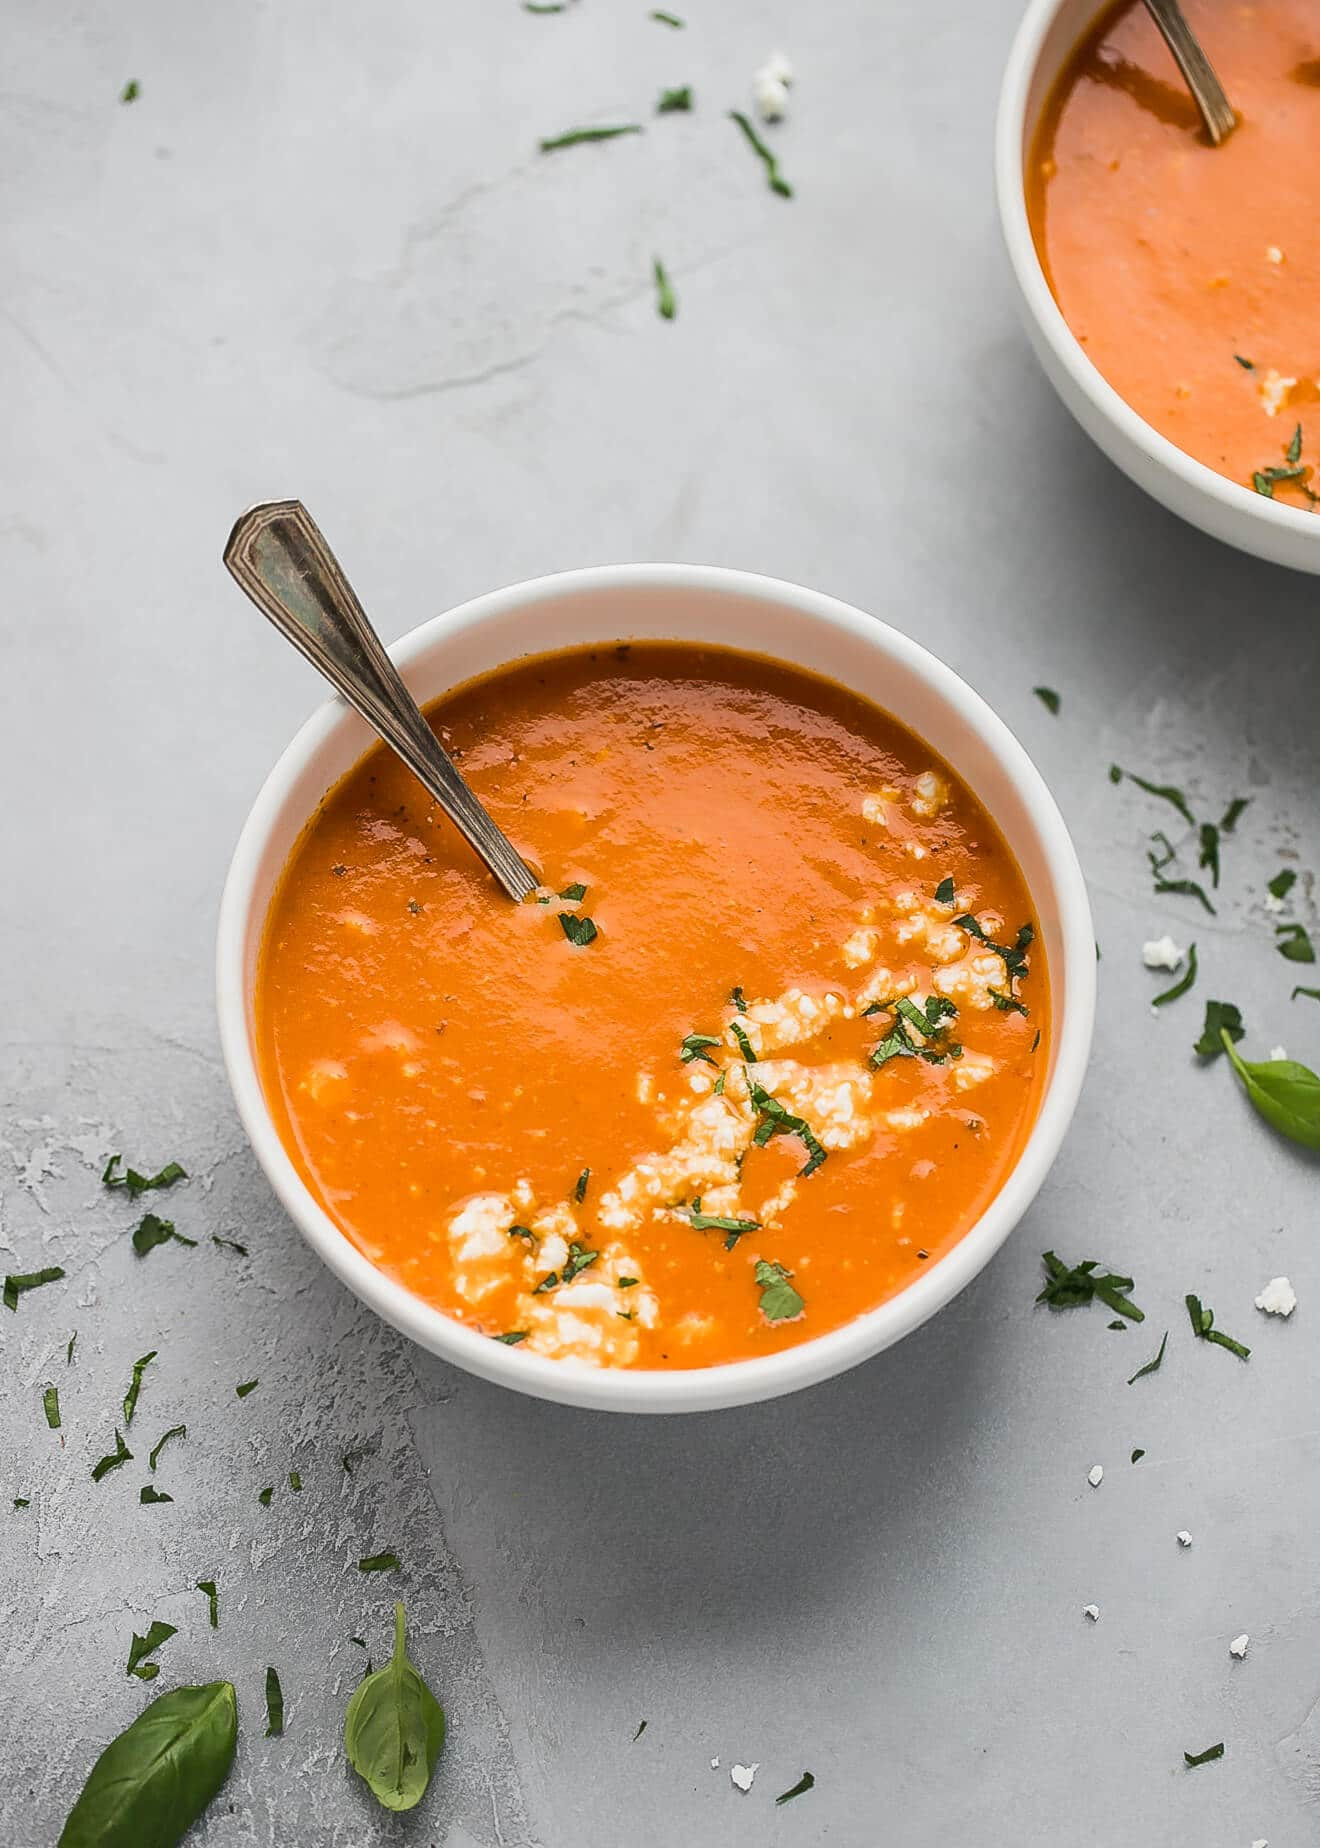 Low Calorie Soup Recipes
 Easy Tomato Feta Soup Recipe Low Calorie Low Carb Keto